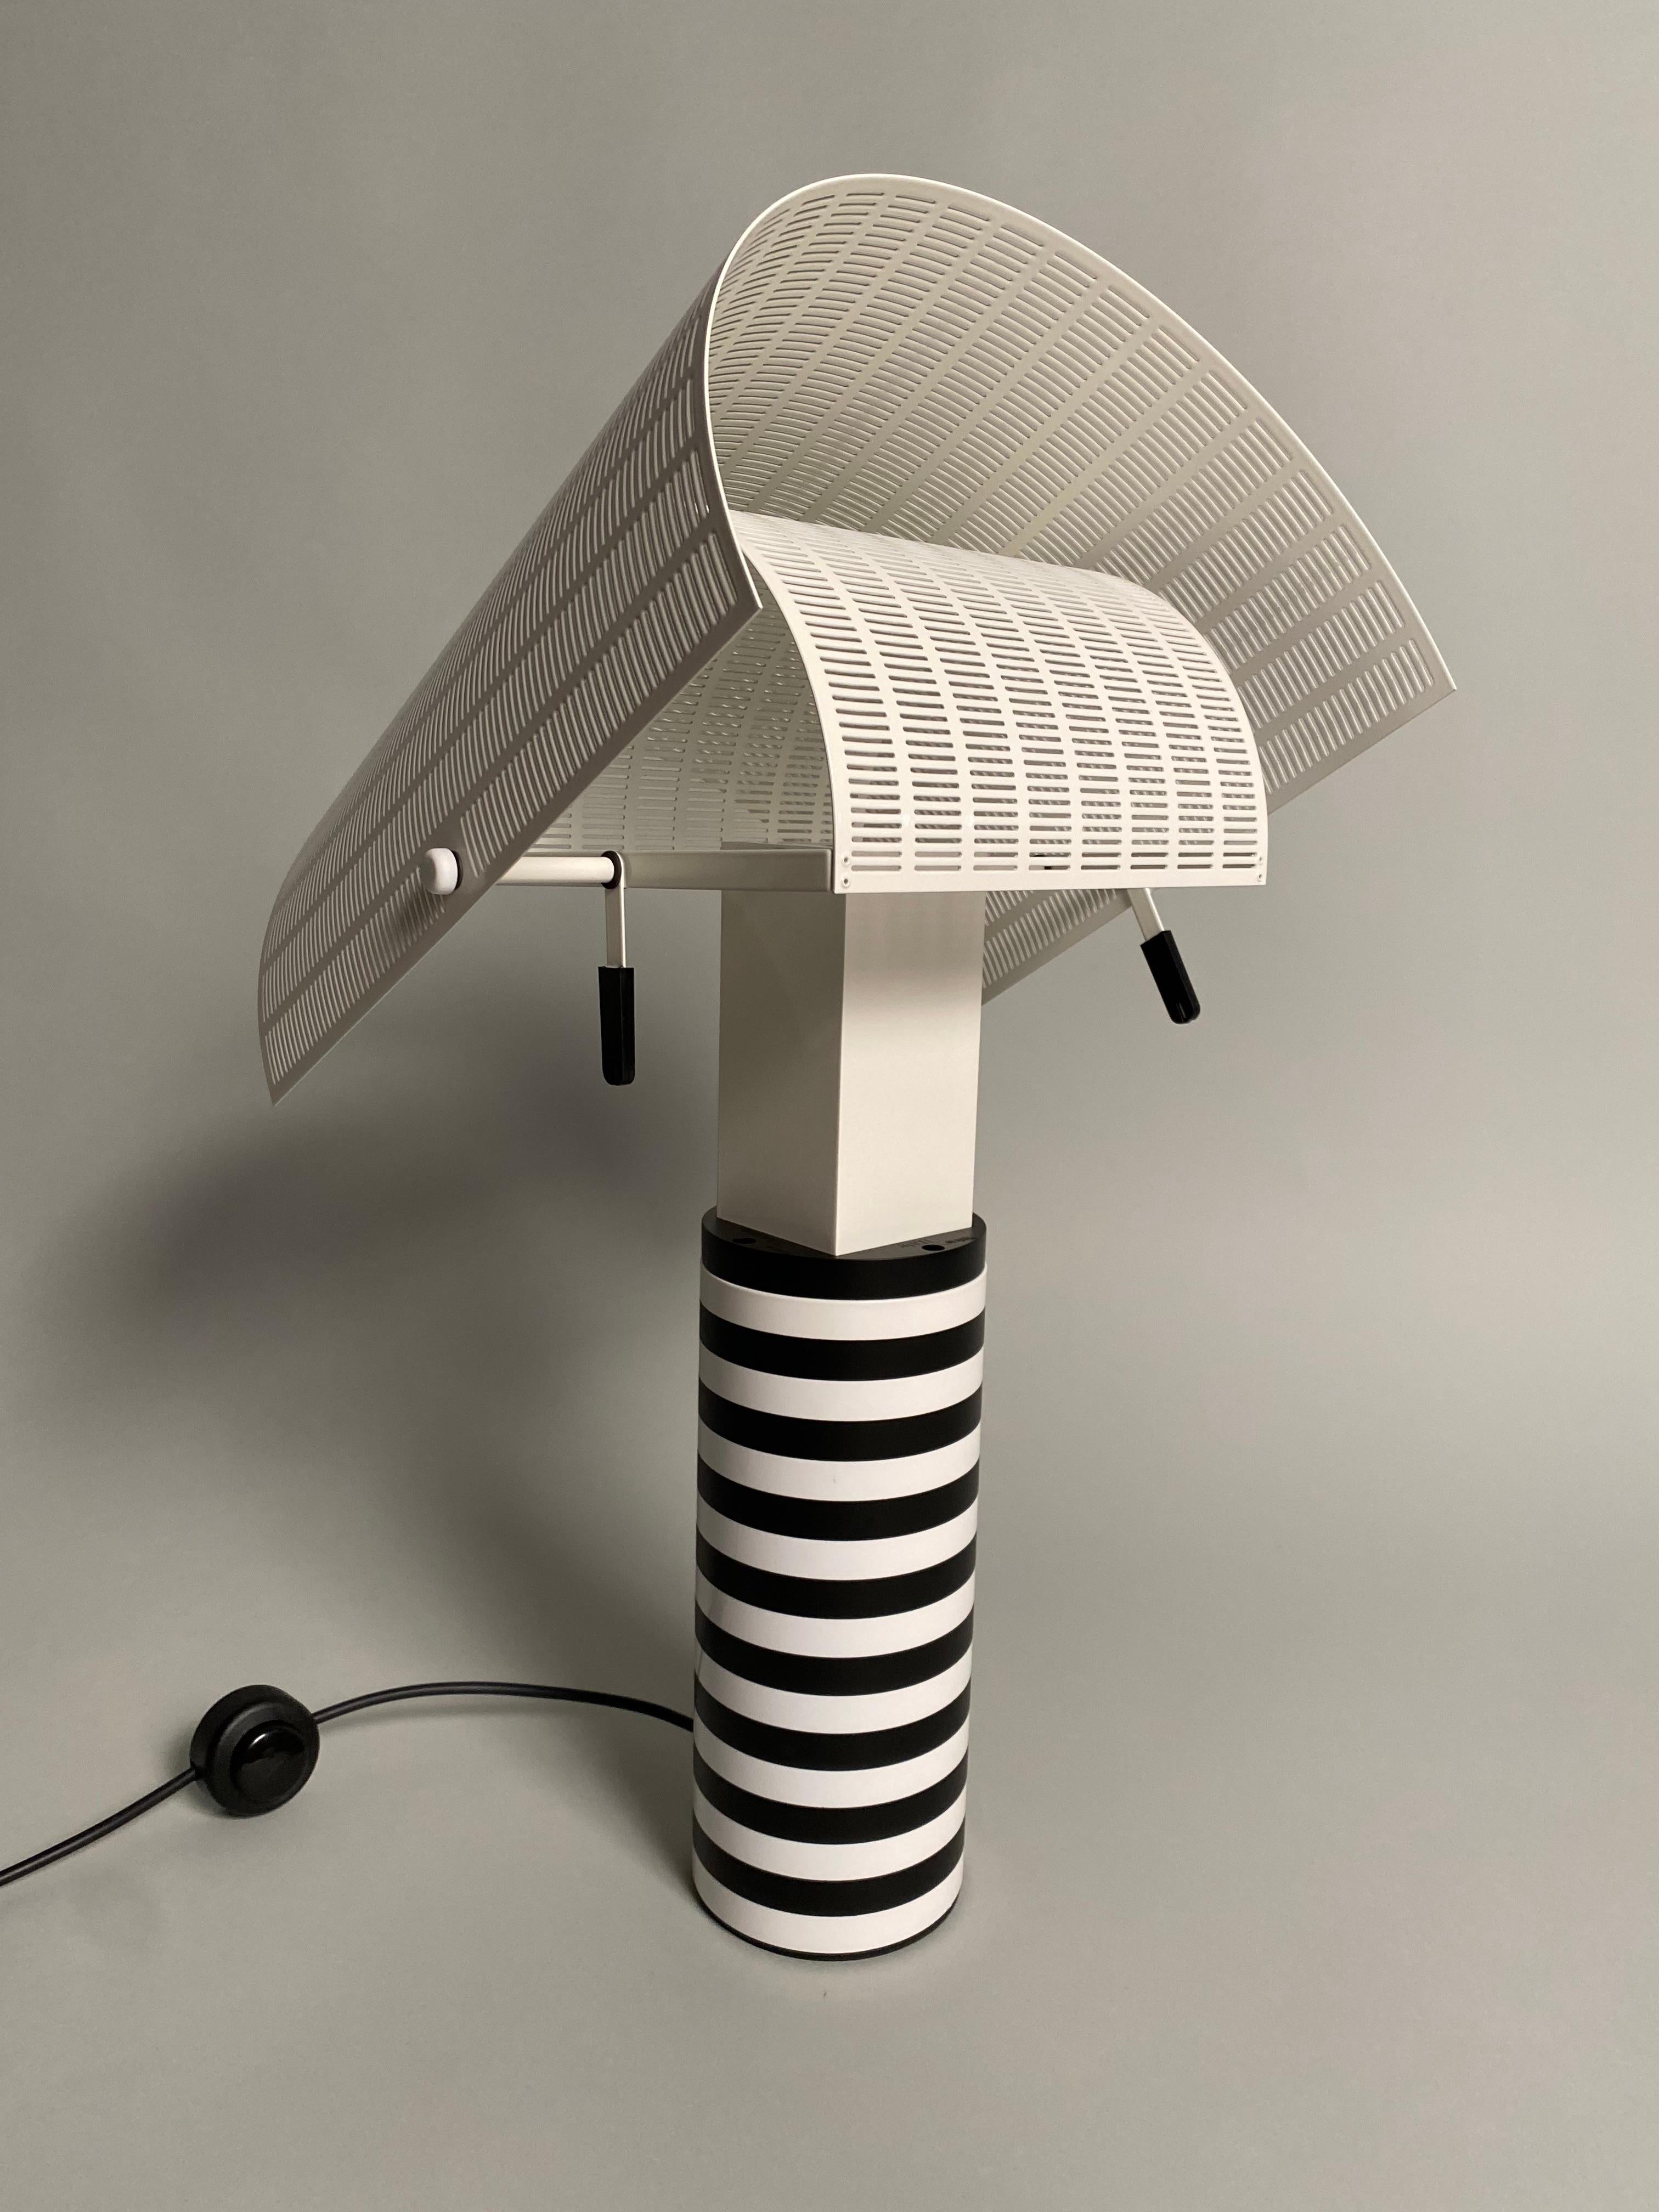 Mario Botta, 'Shogun' Postmodern Table Lamps, Artemide Milano, 1980s For Sale 1